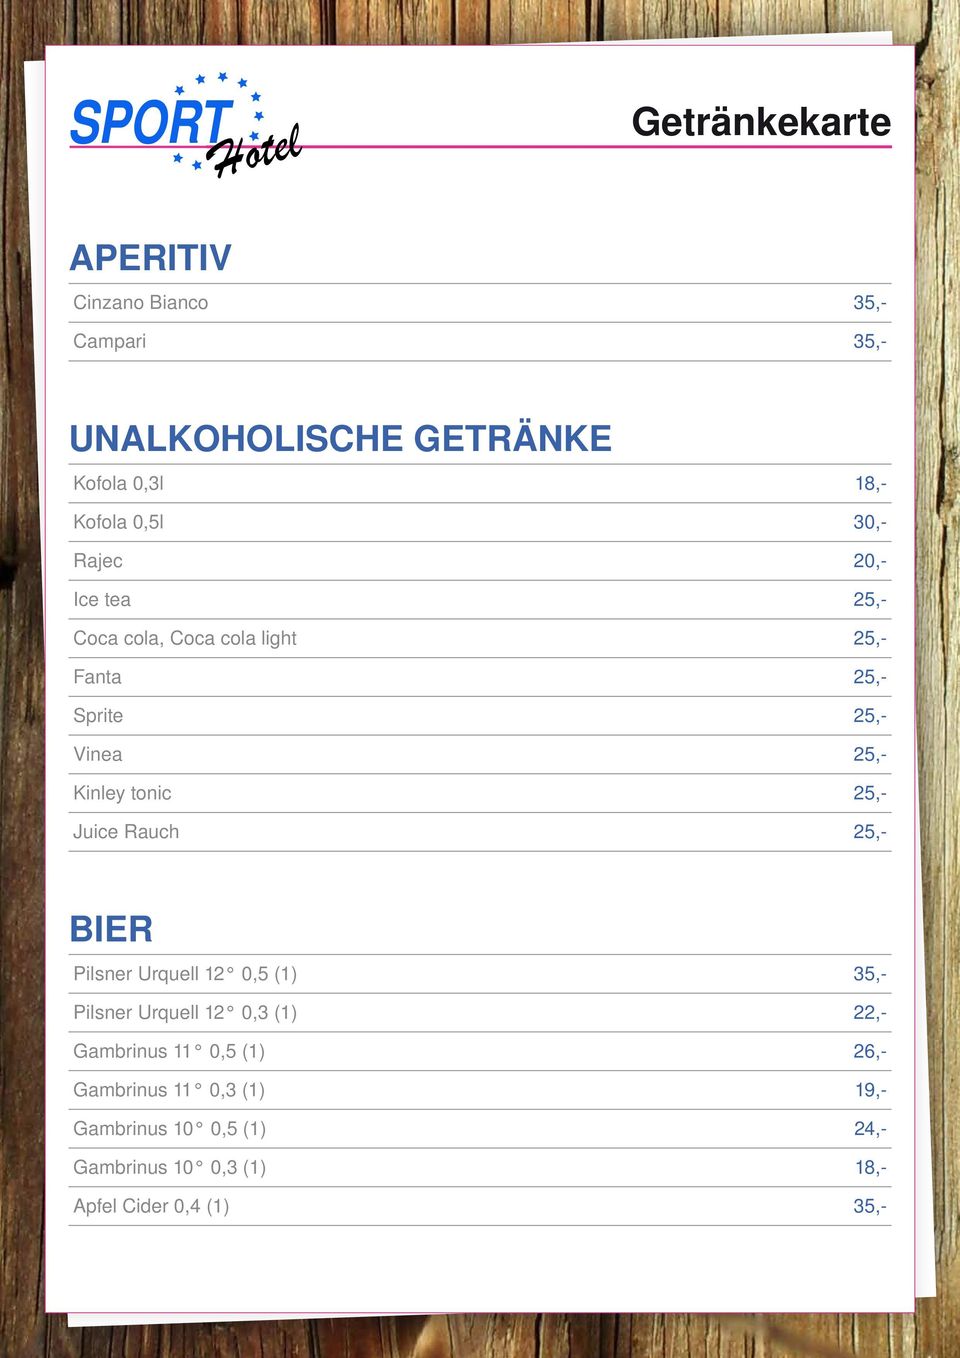 25,- Juice Rauch 25,- BIER Pilsner Urquell 12 0,5 (1) 35,- Pilsner Urquell 12 0,3 (1) 22,- Gambrinus 11 0,5